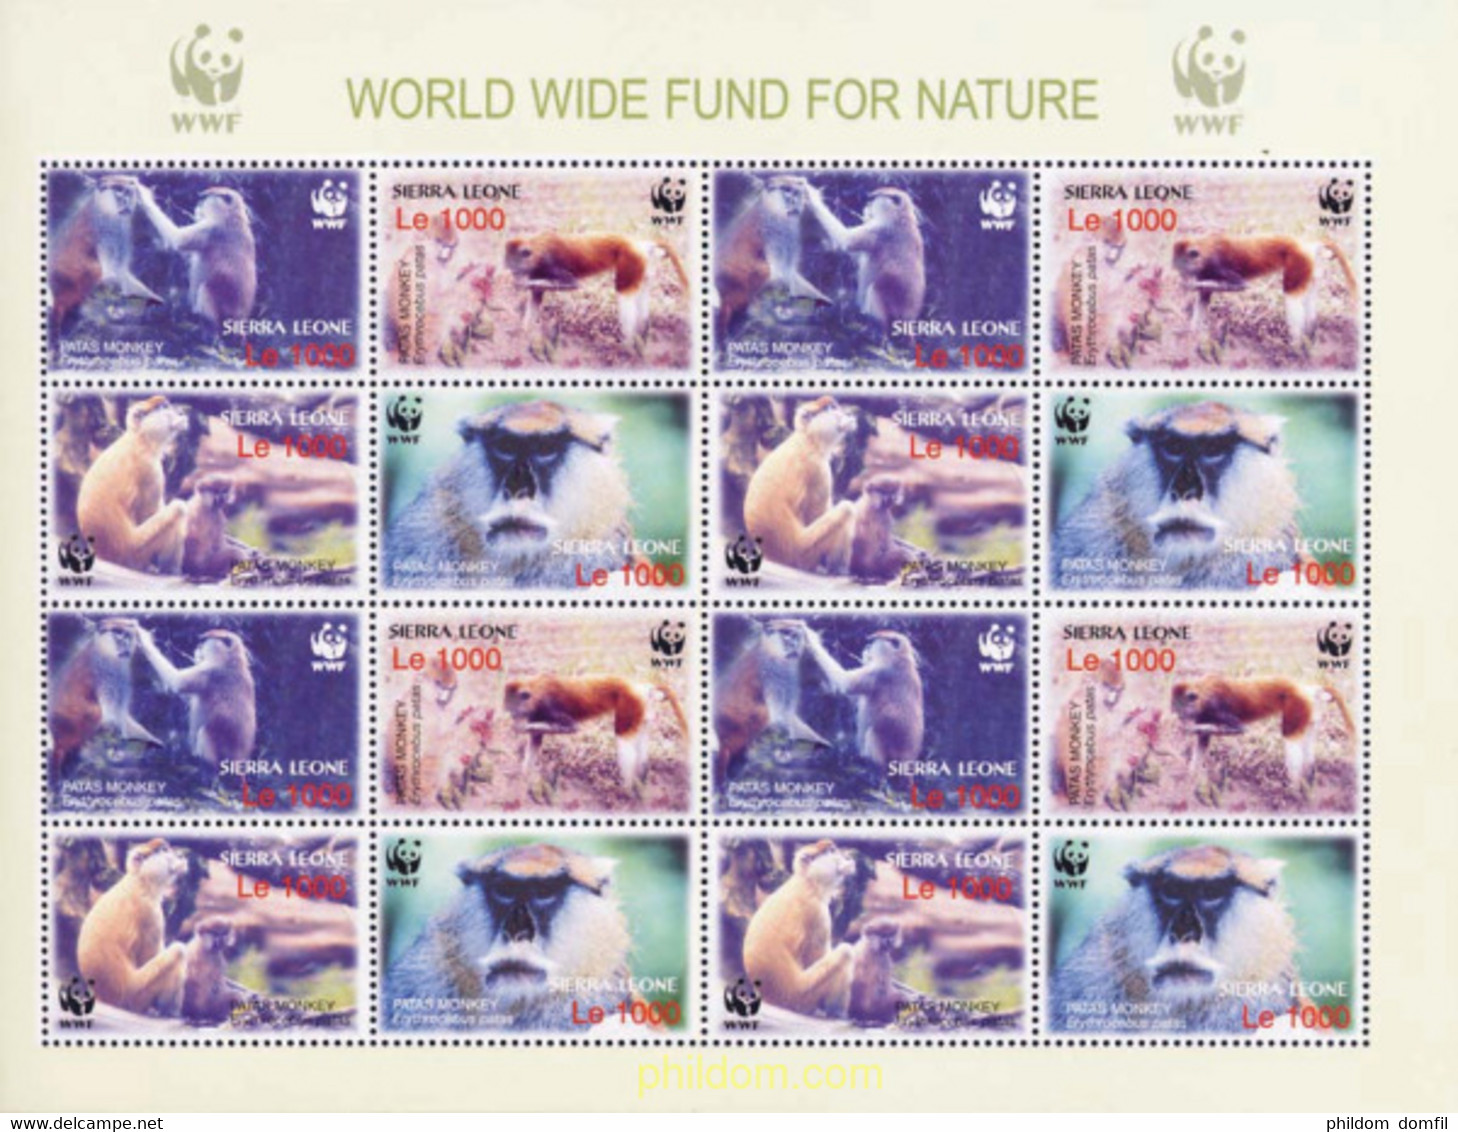 143123 MNH SIERRA LEONA 2004 WWF - Chimpanzees